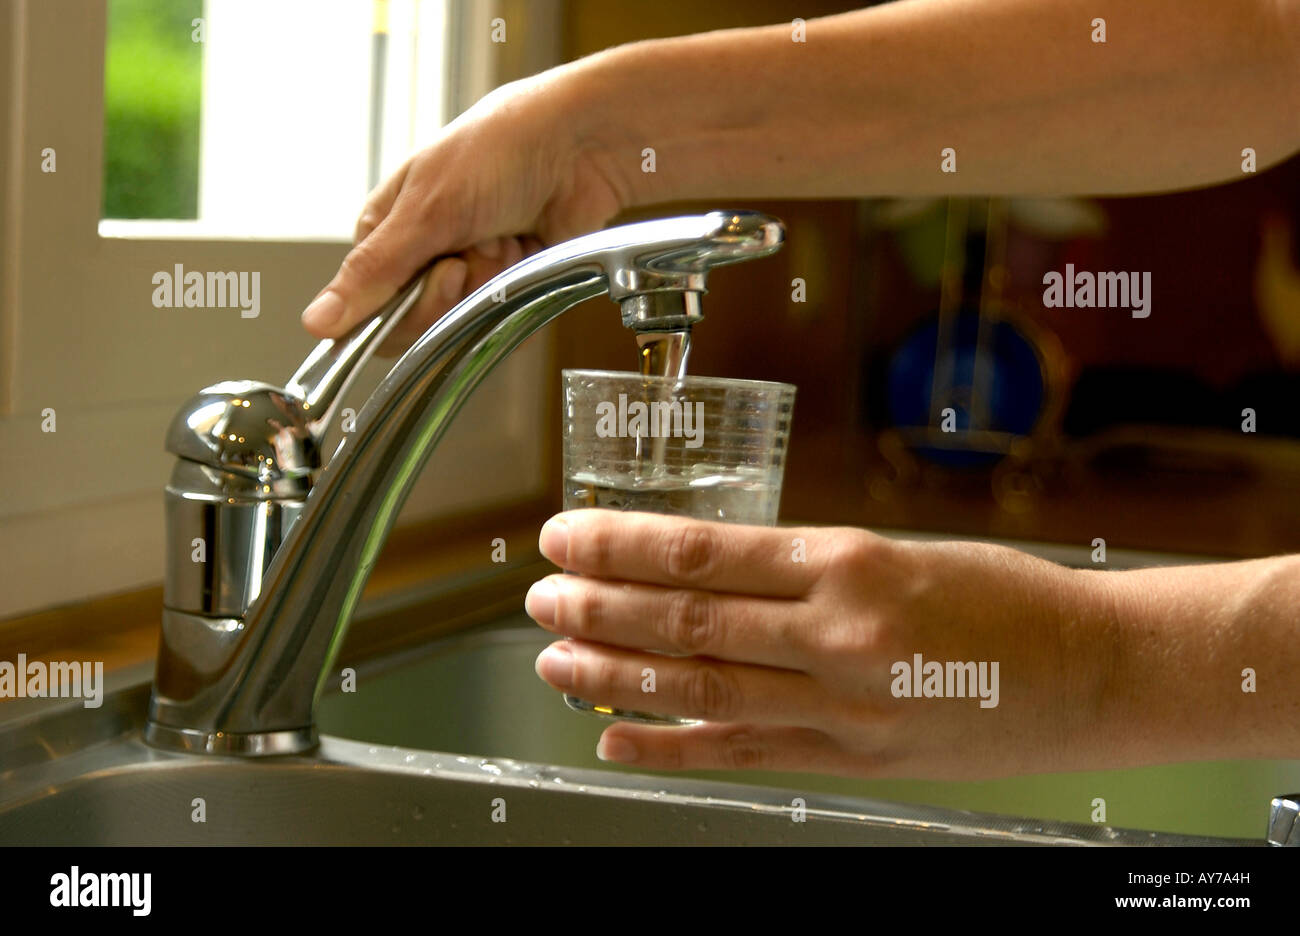 Beber agua del grifo fotografías e imágenes de alta resolución - Alamy